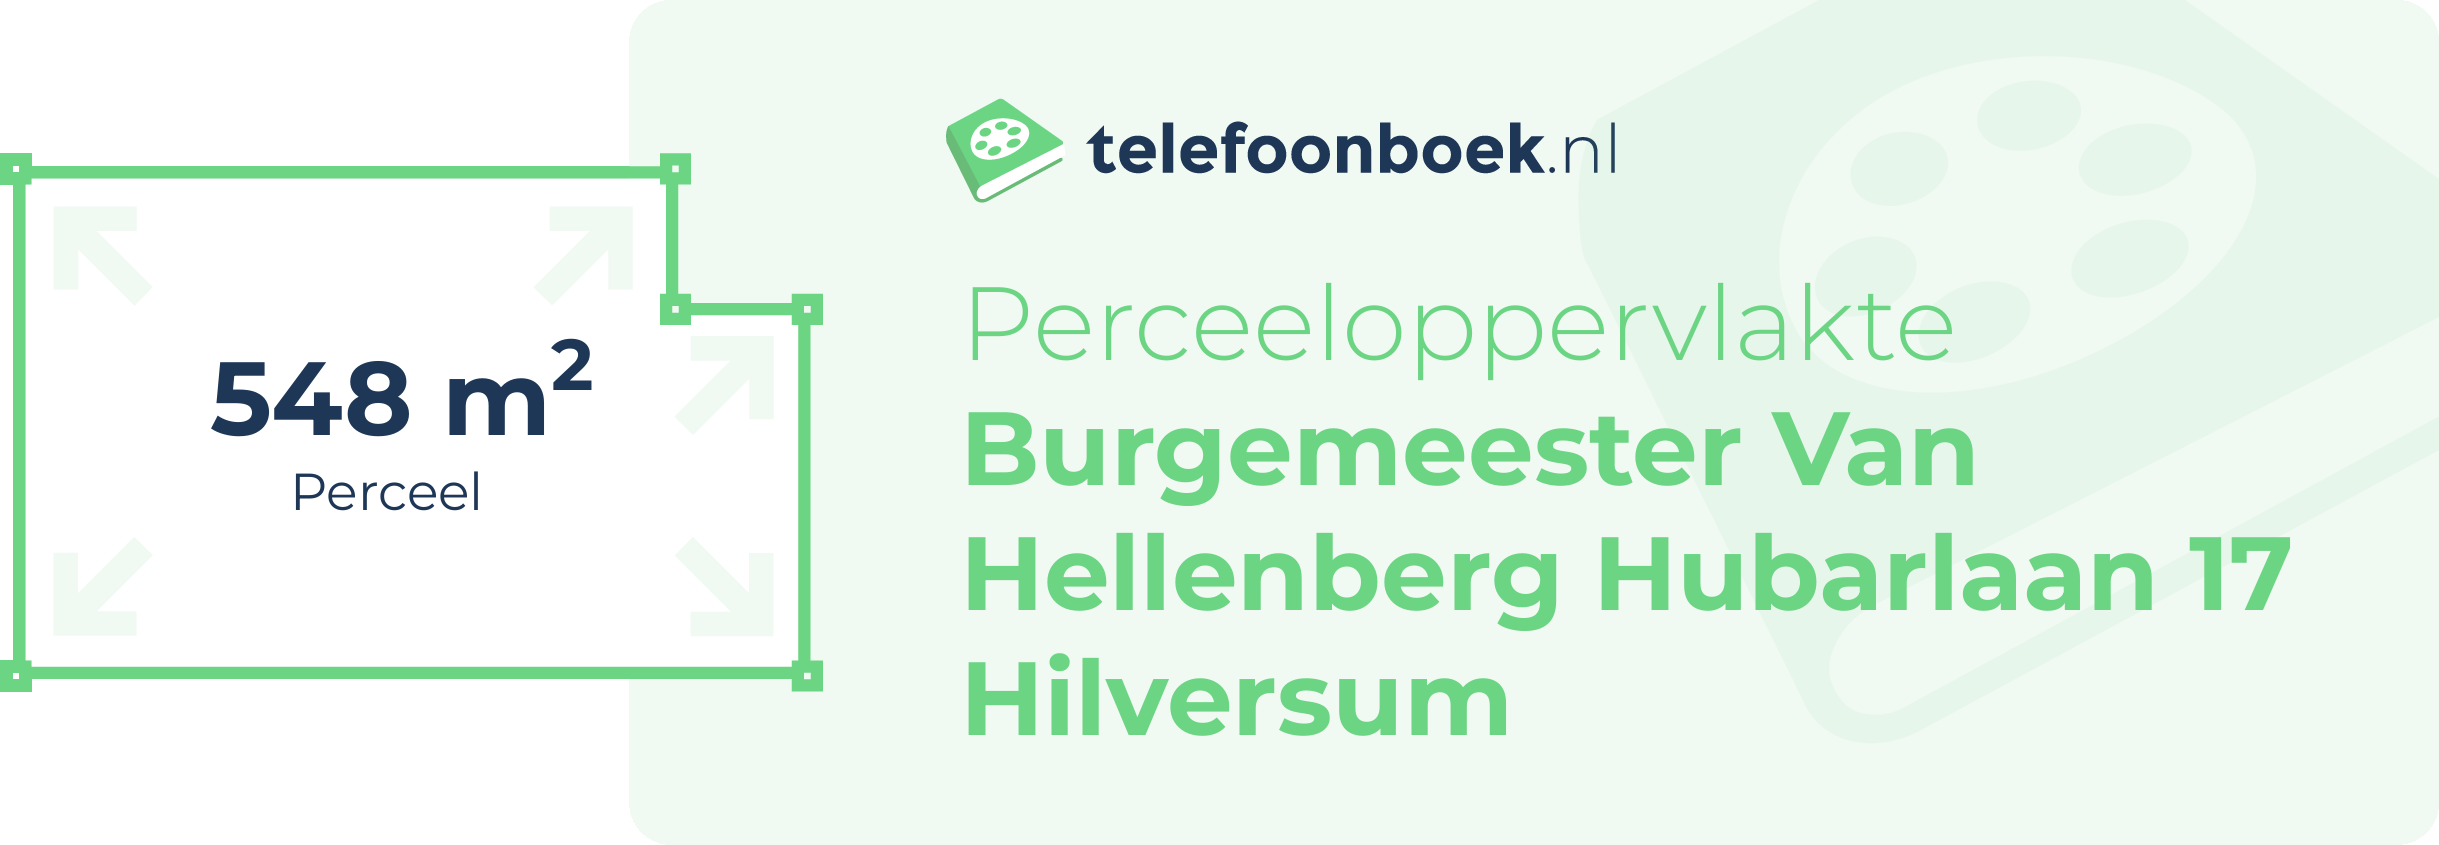 Perceeloppervlakte Burgemeester Van Hellenberg Hubarlaan 17 Hilversum